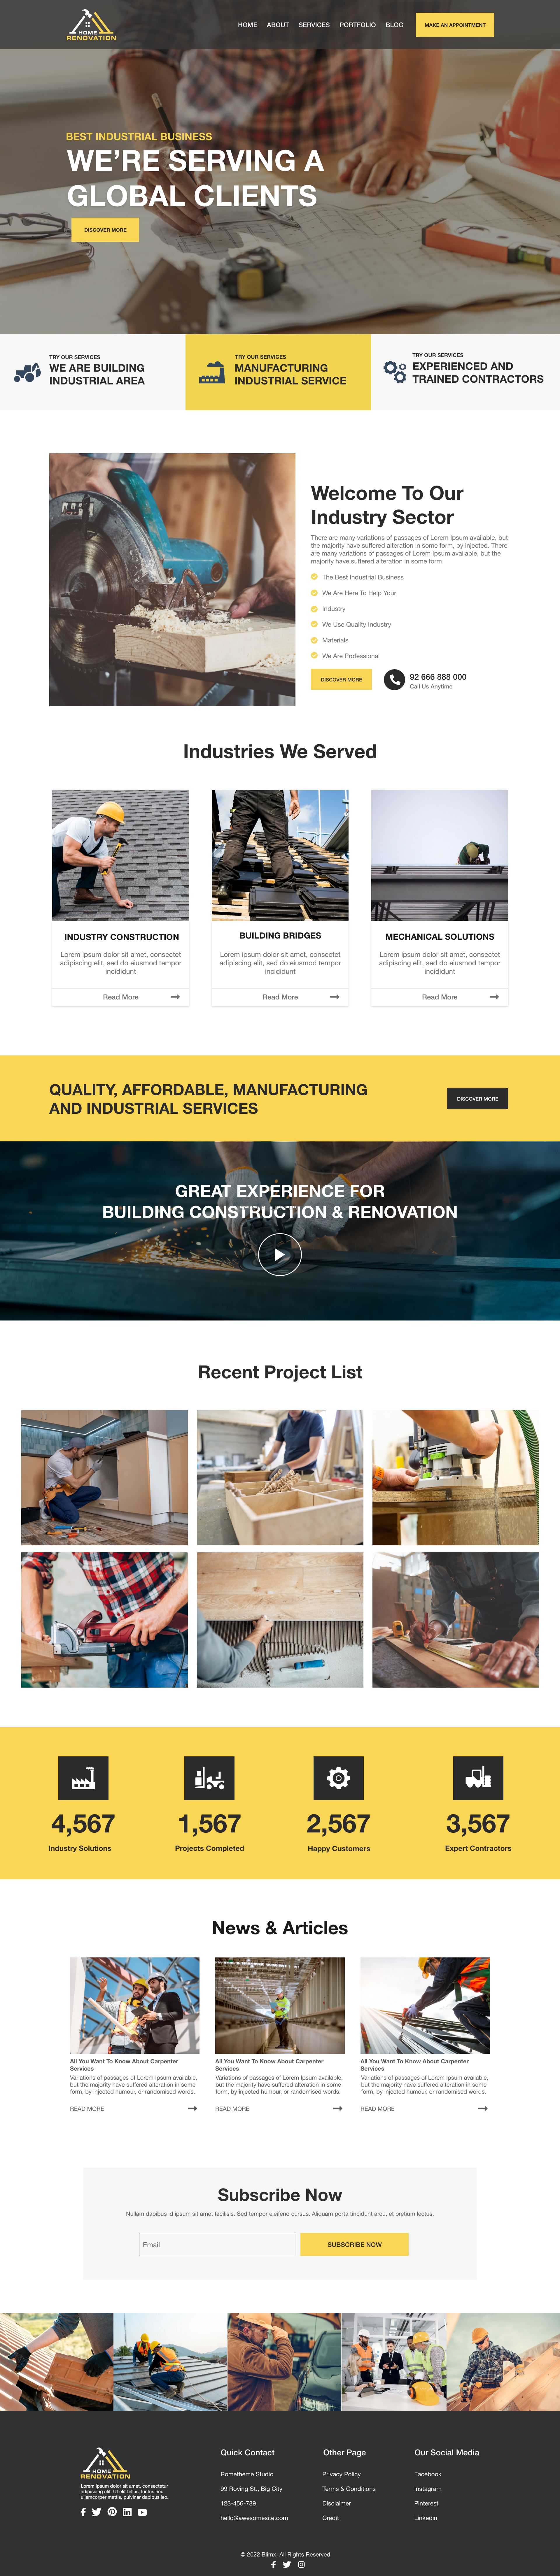 Building Construction Website Design